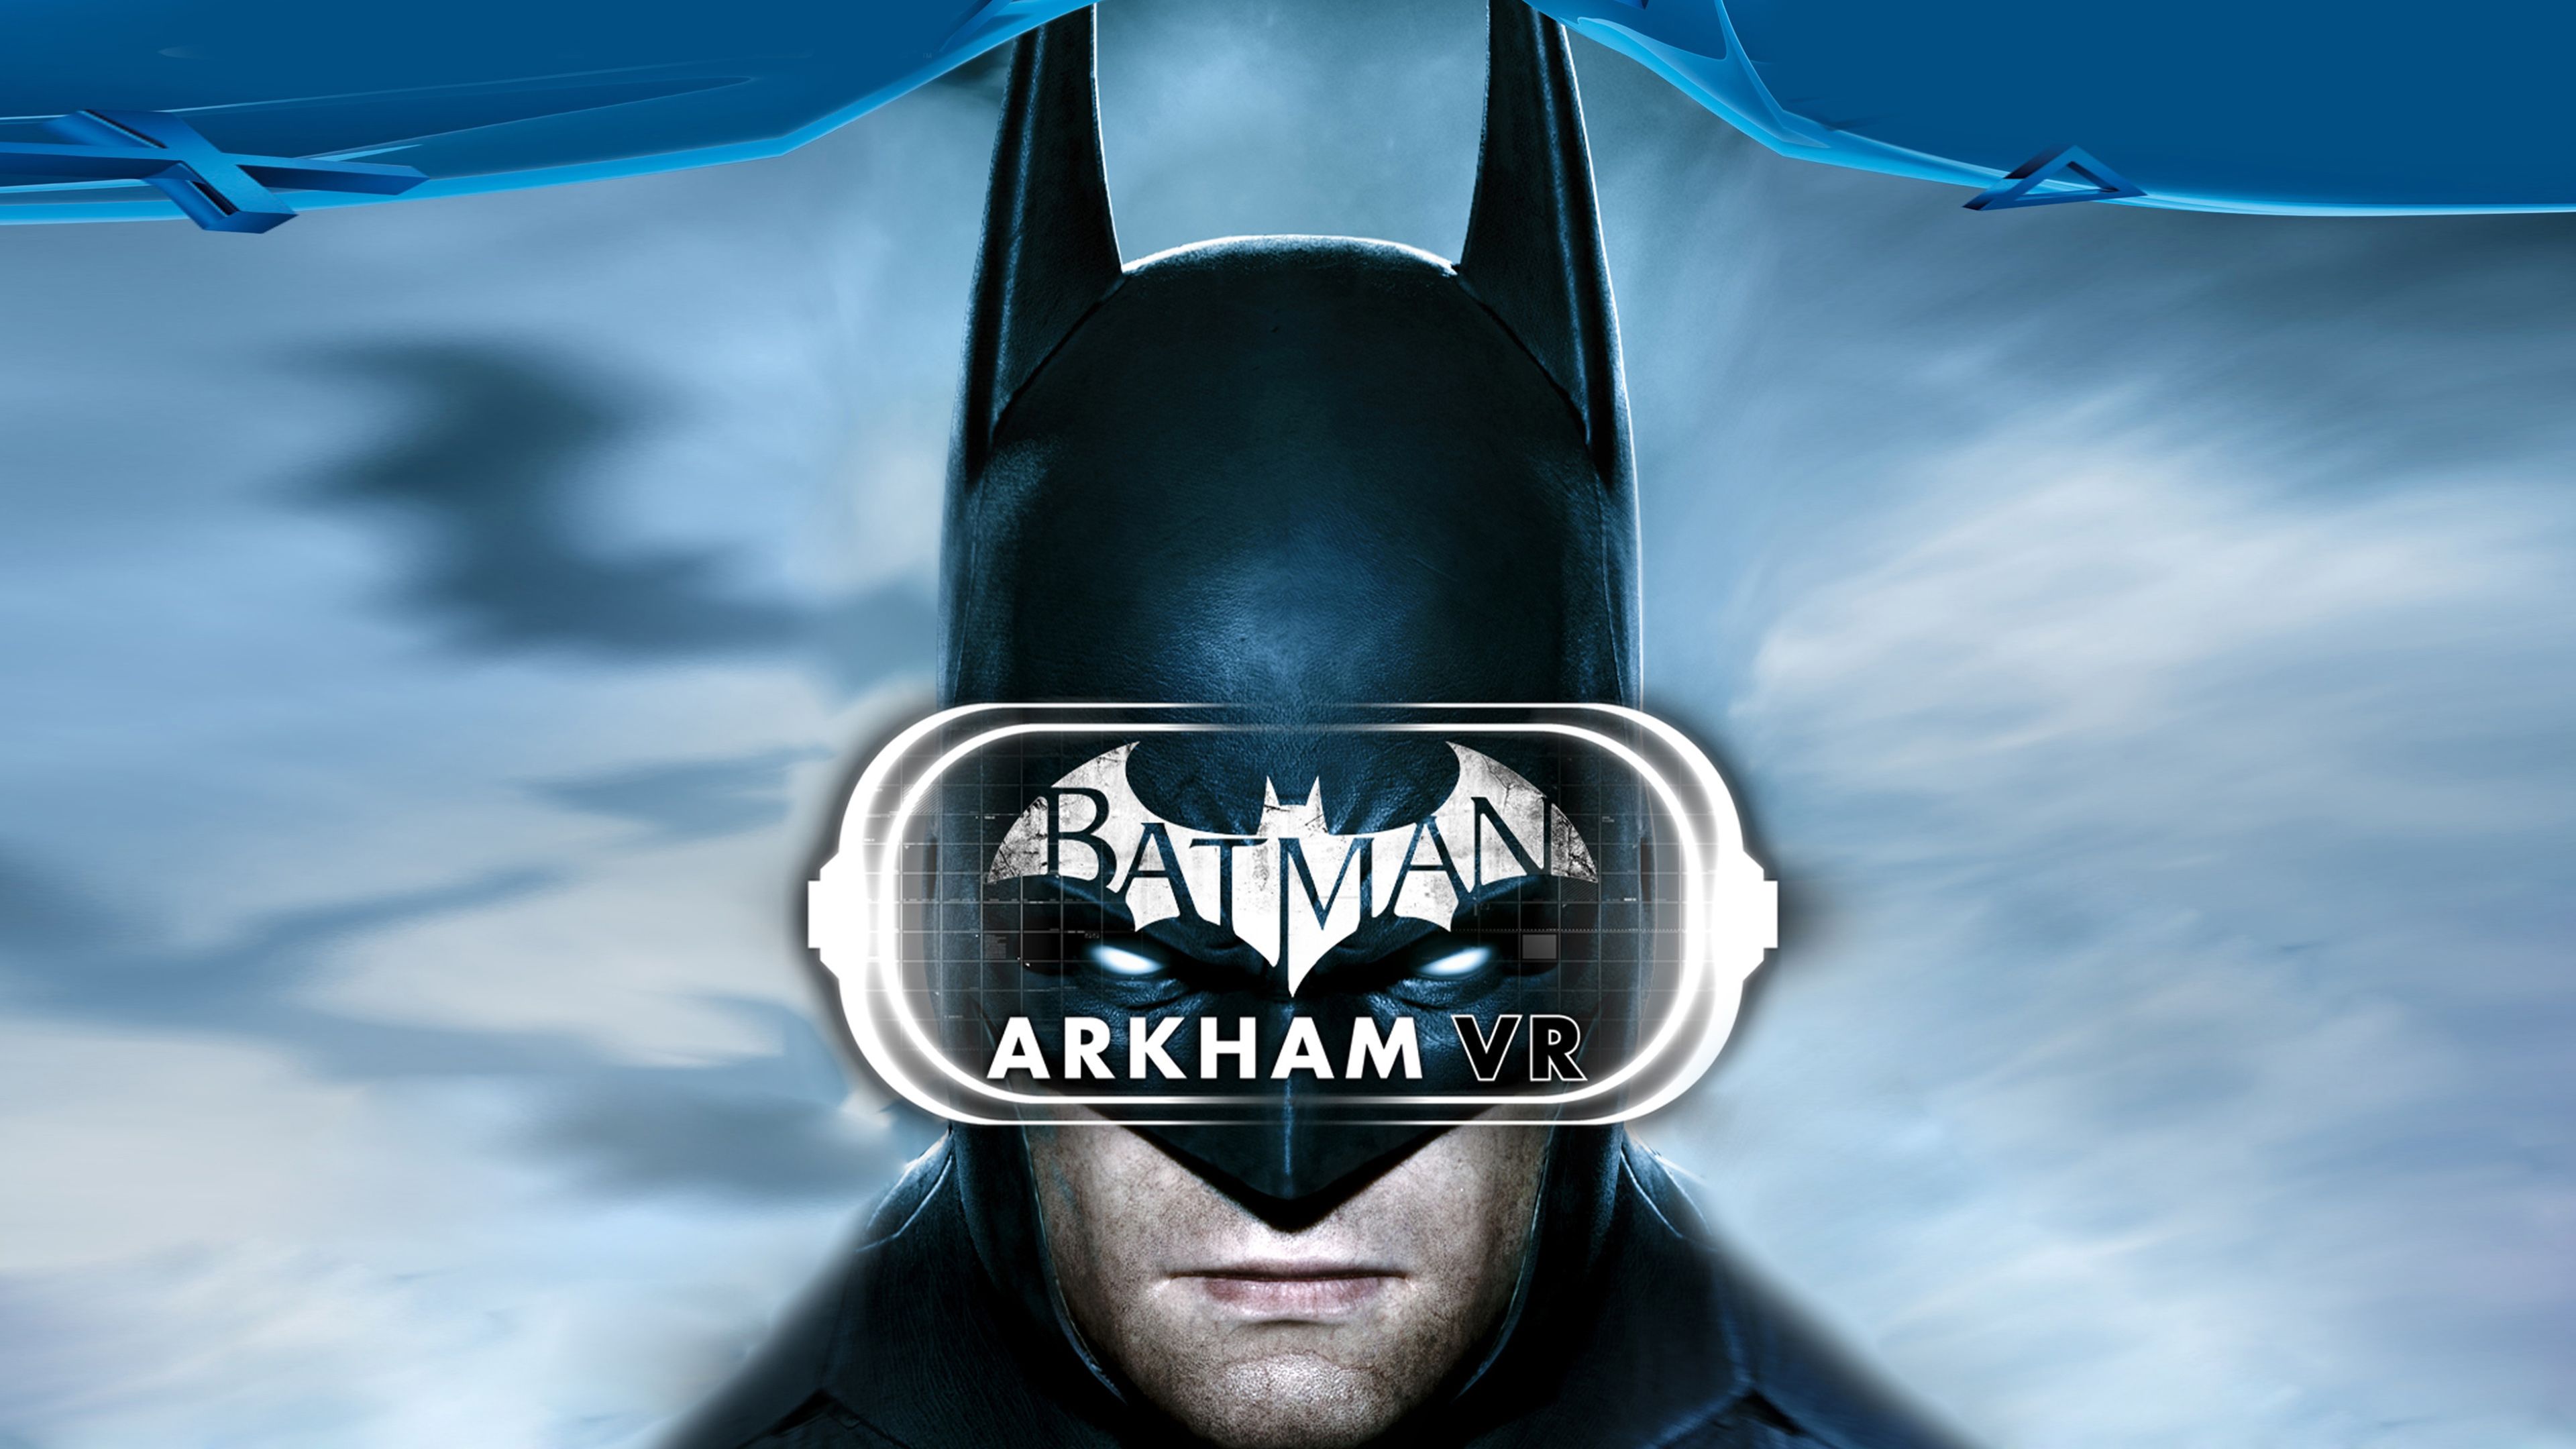 Arkham 4K wallpaper for your desktop or mobile screen free